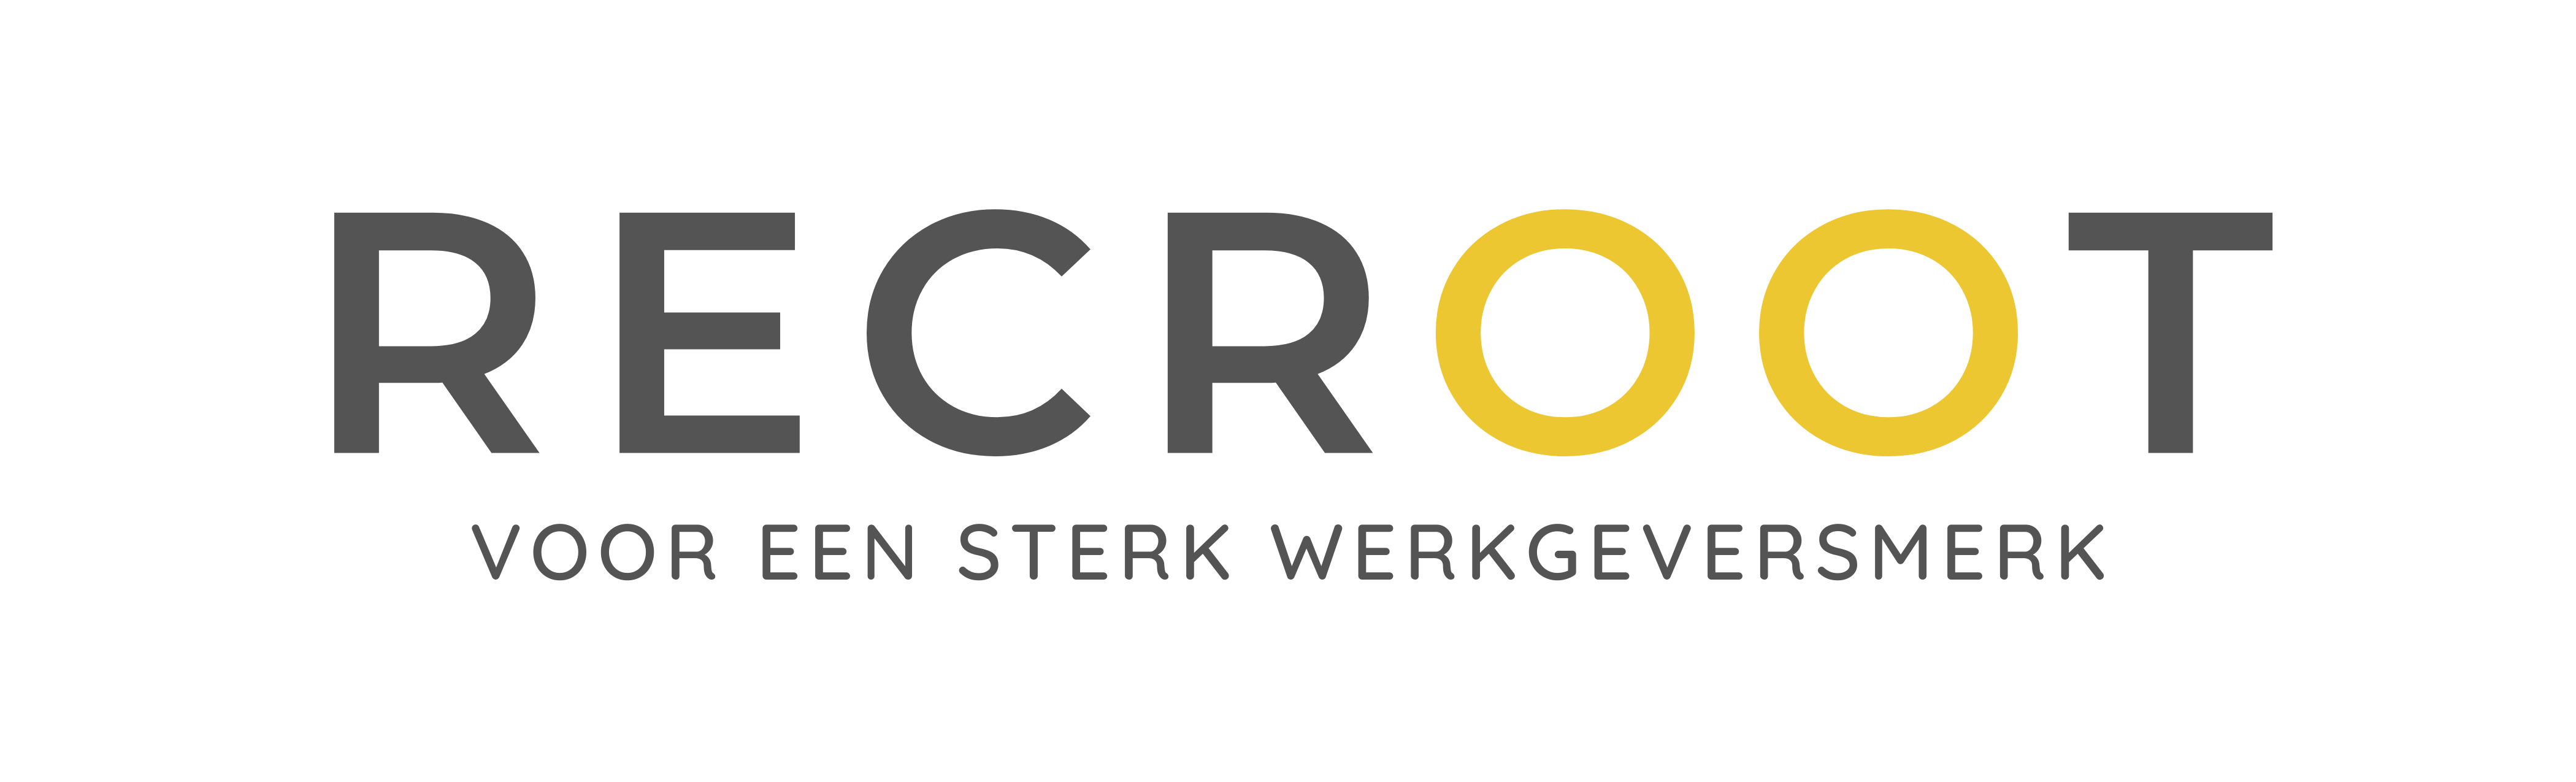 RECROOT logo